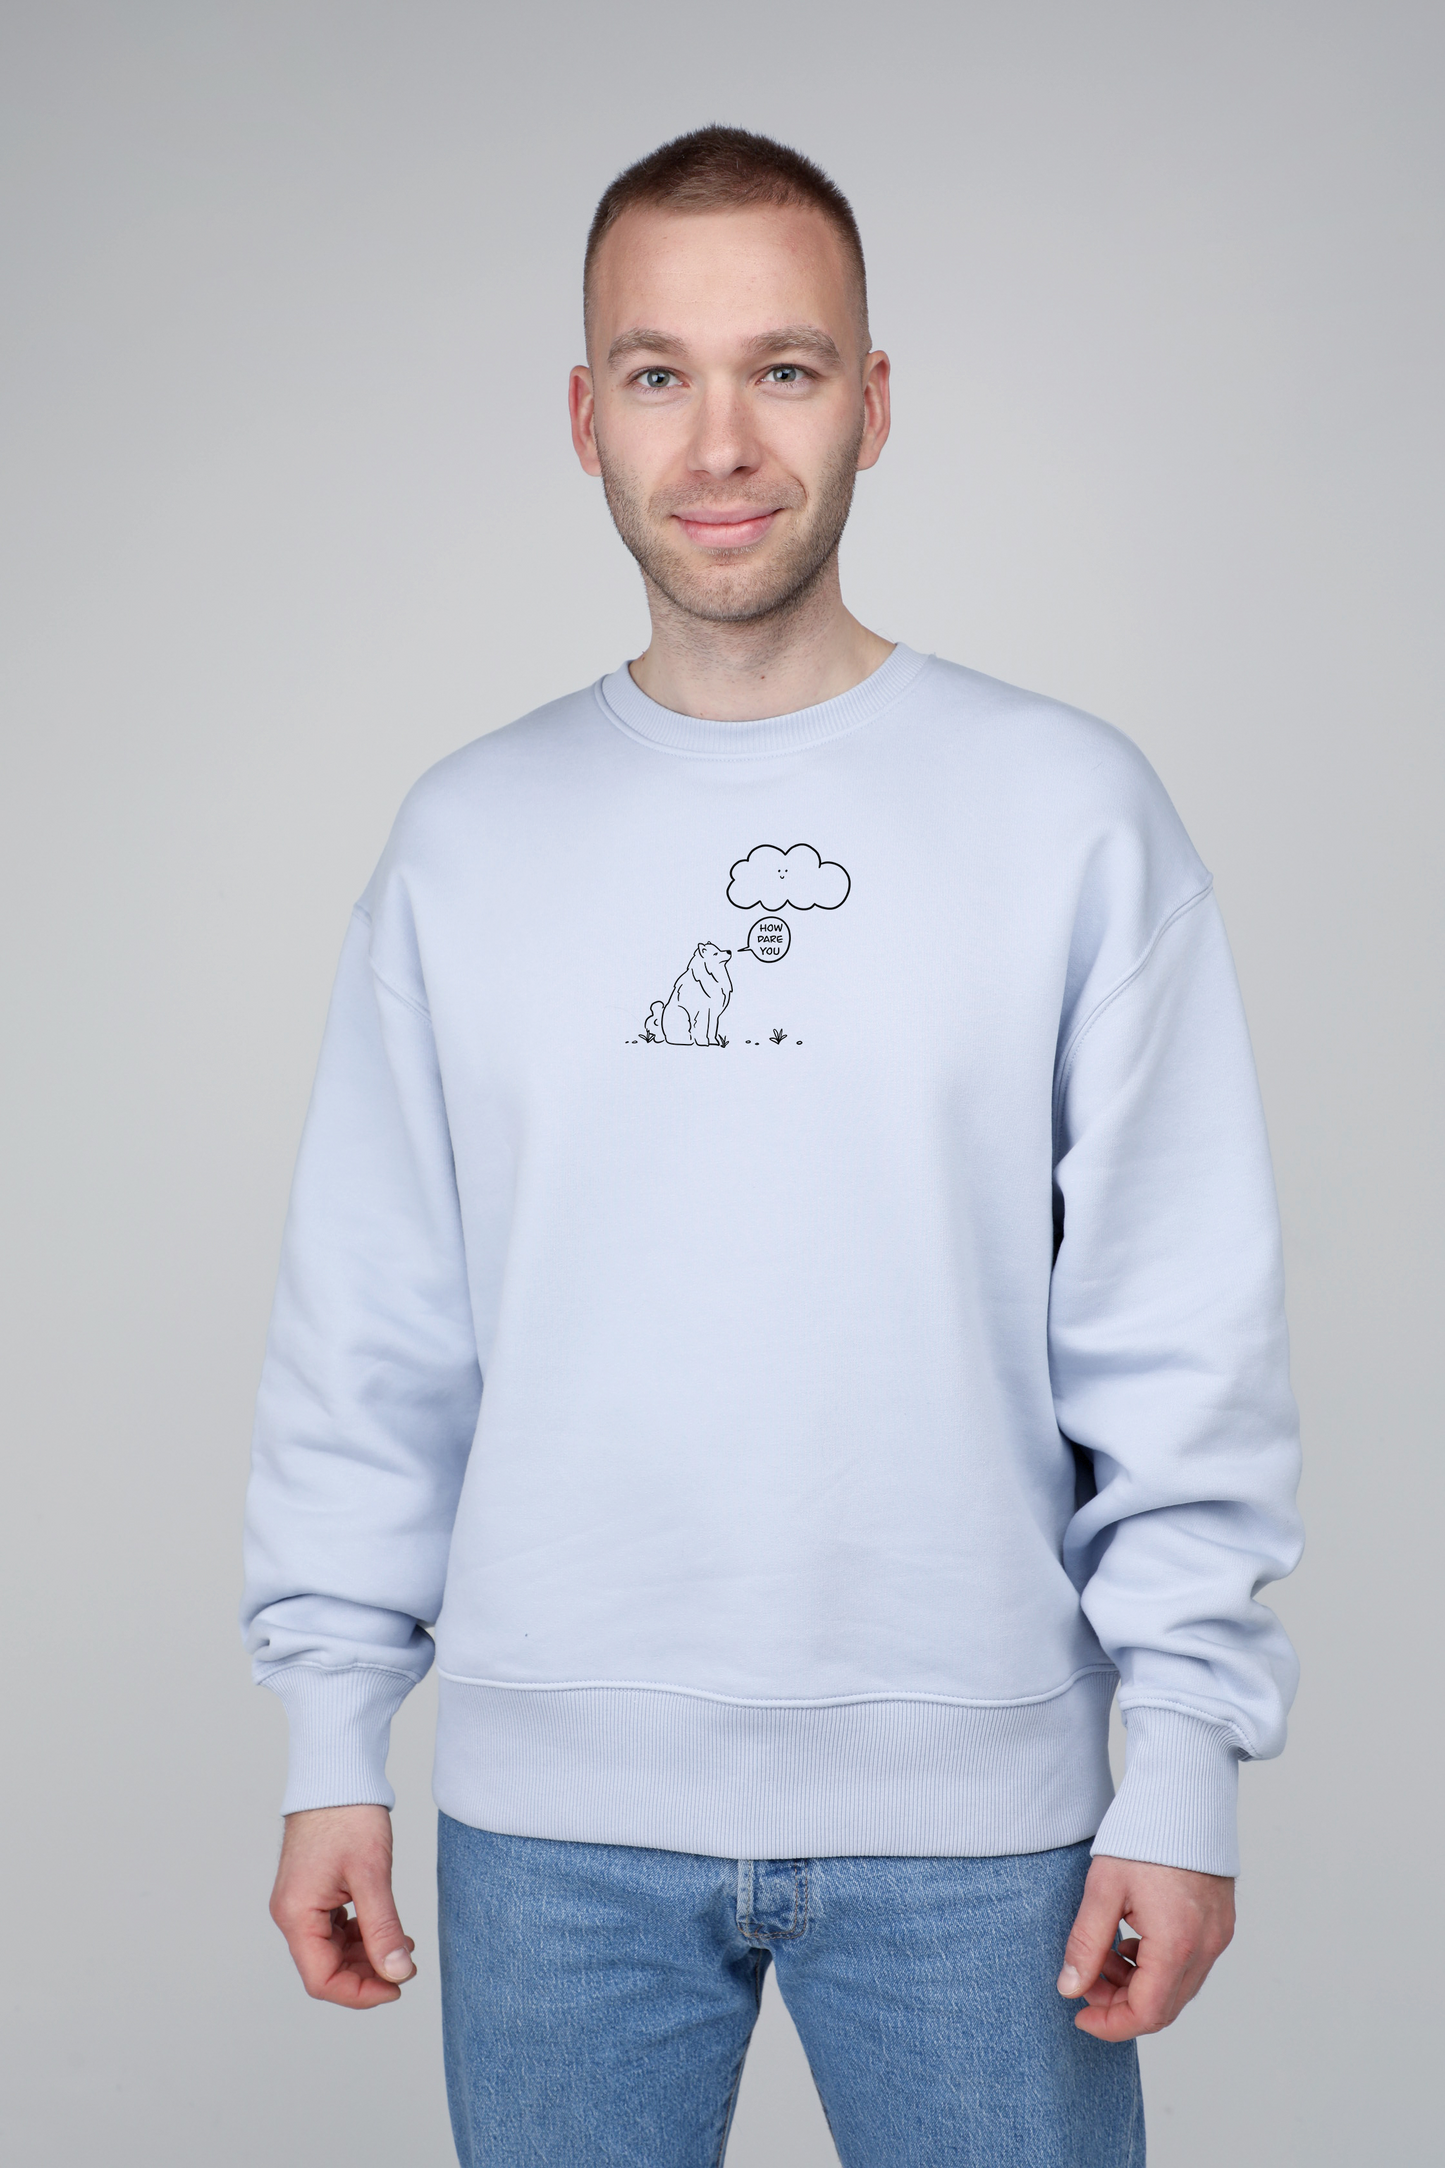 Cloud dog | Crew neck sweatshirt with dog. Oversize fit | Unisex - premium dog goods handmade in Europe by animalistus